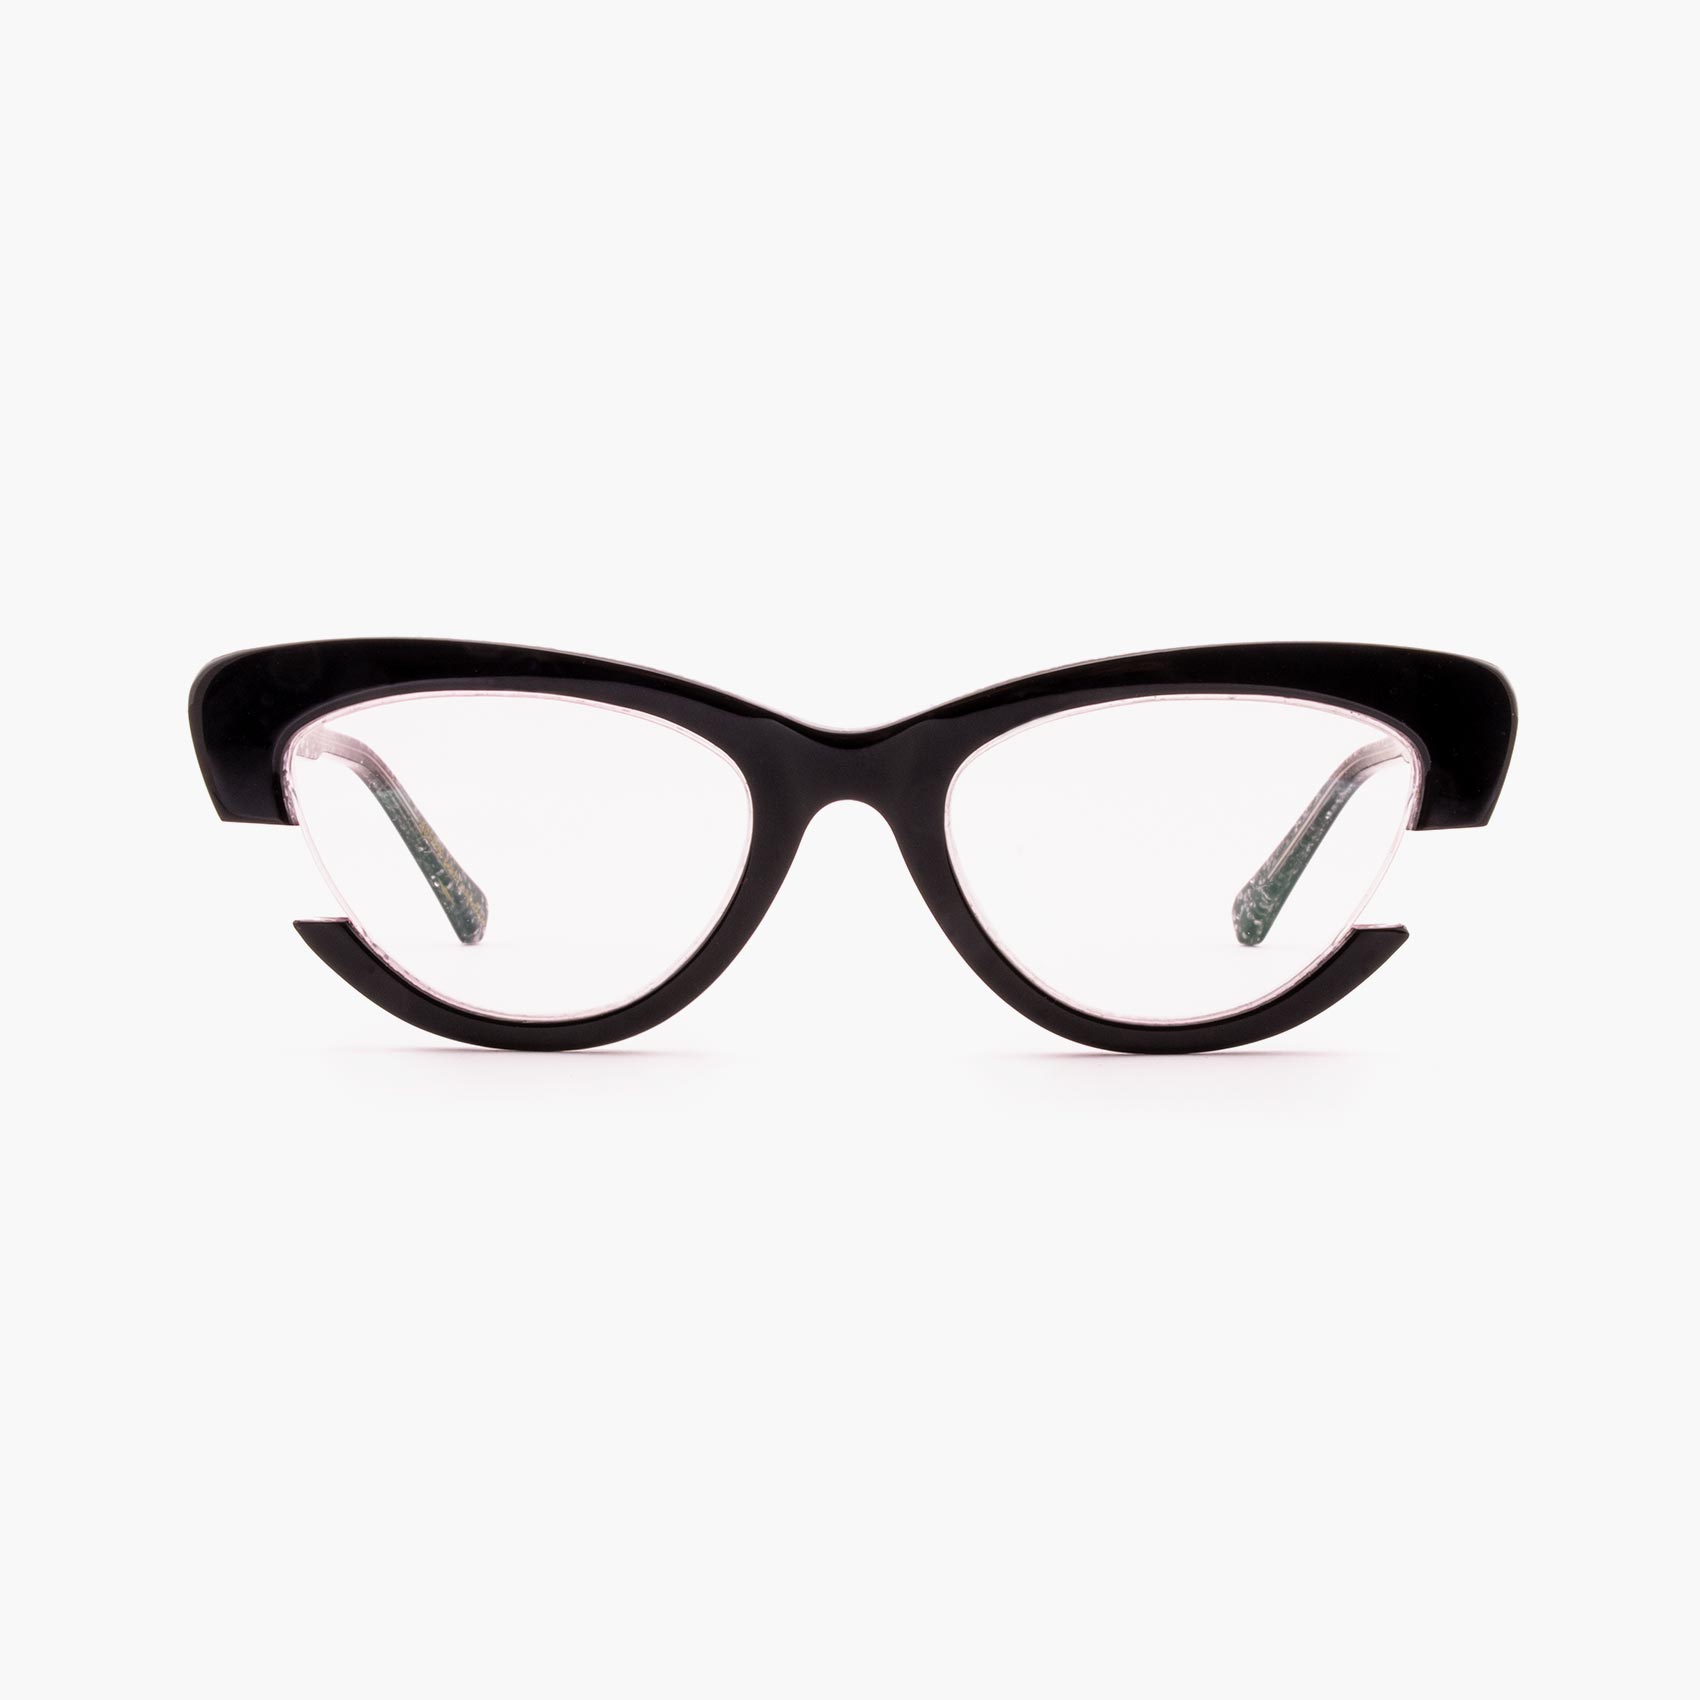 Proud eyewear Jennifer C3 F Acetate cat eye glasses for women